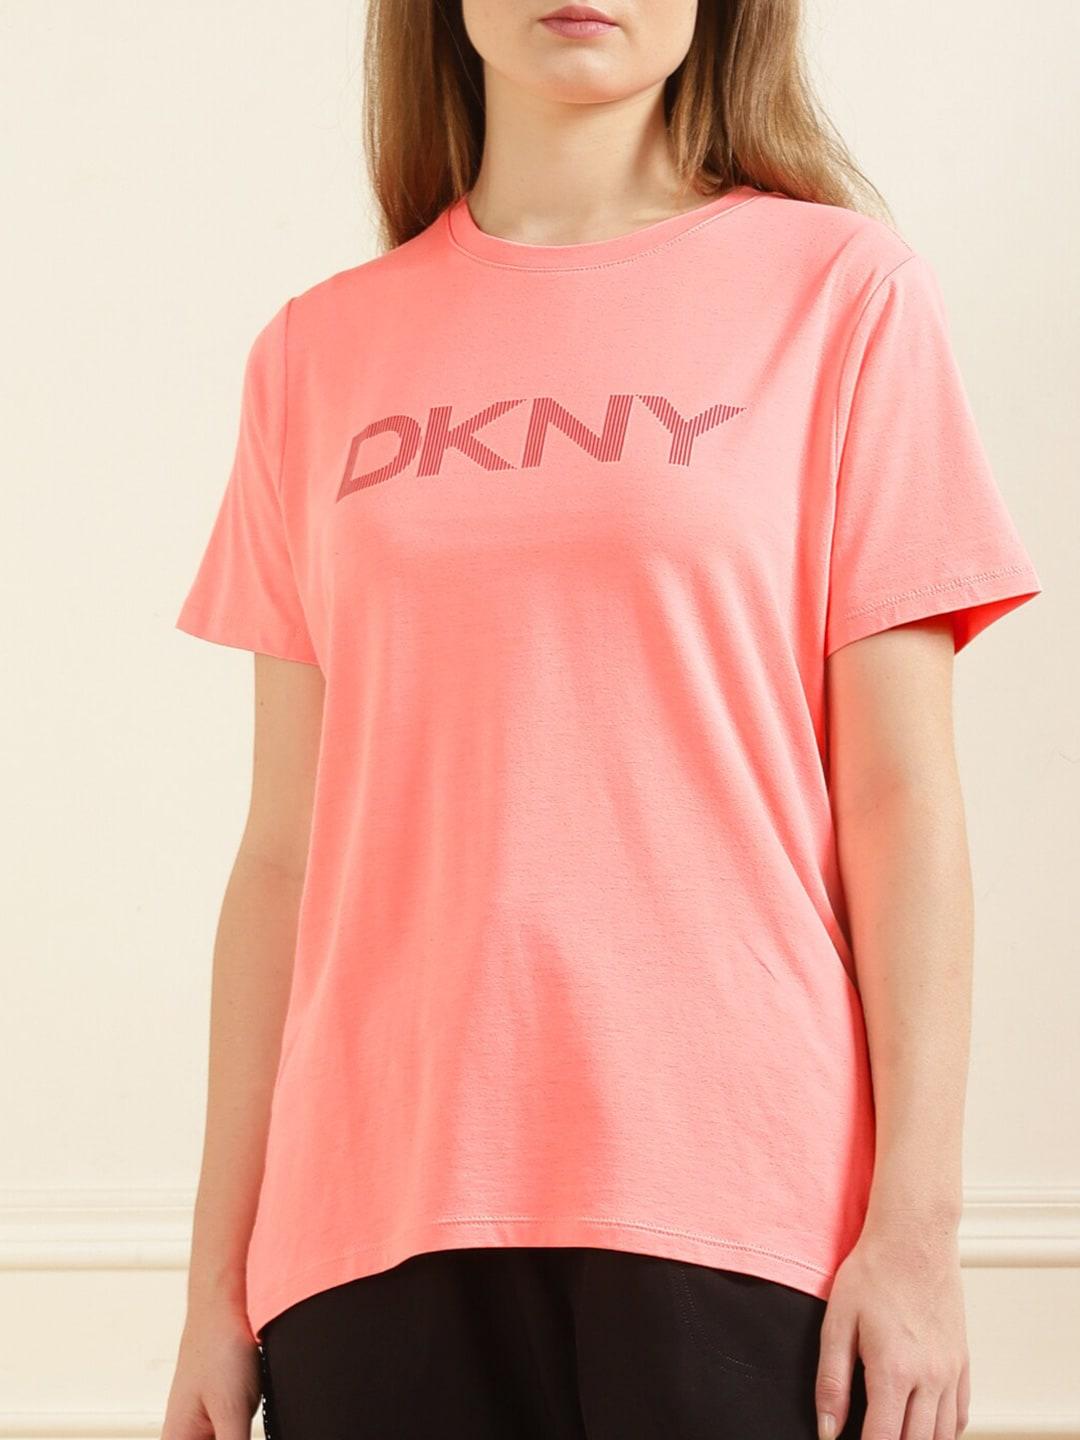 dkny-women-coral-printed-top